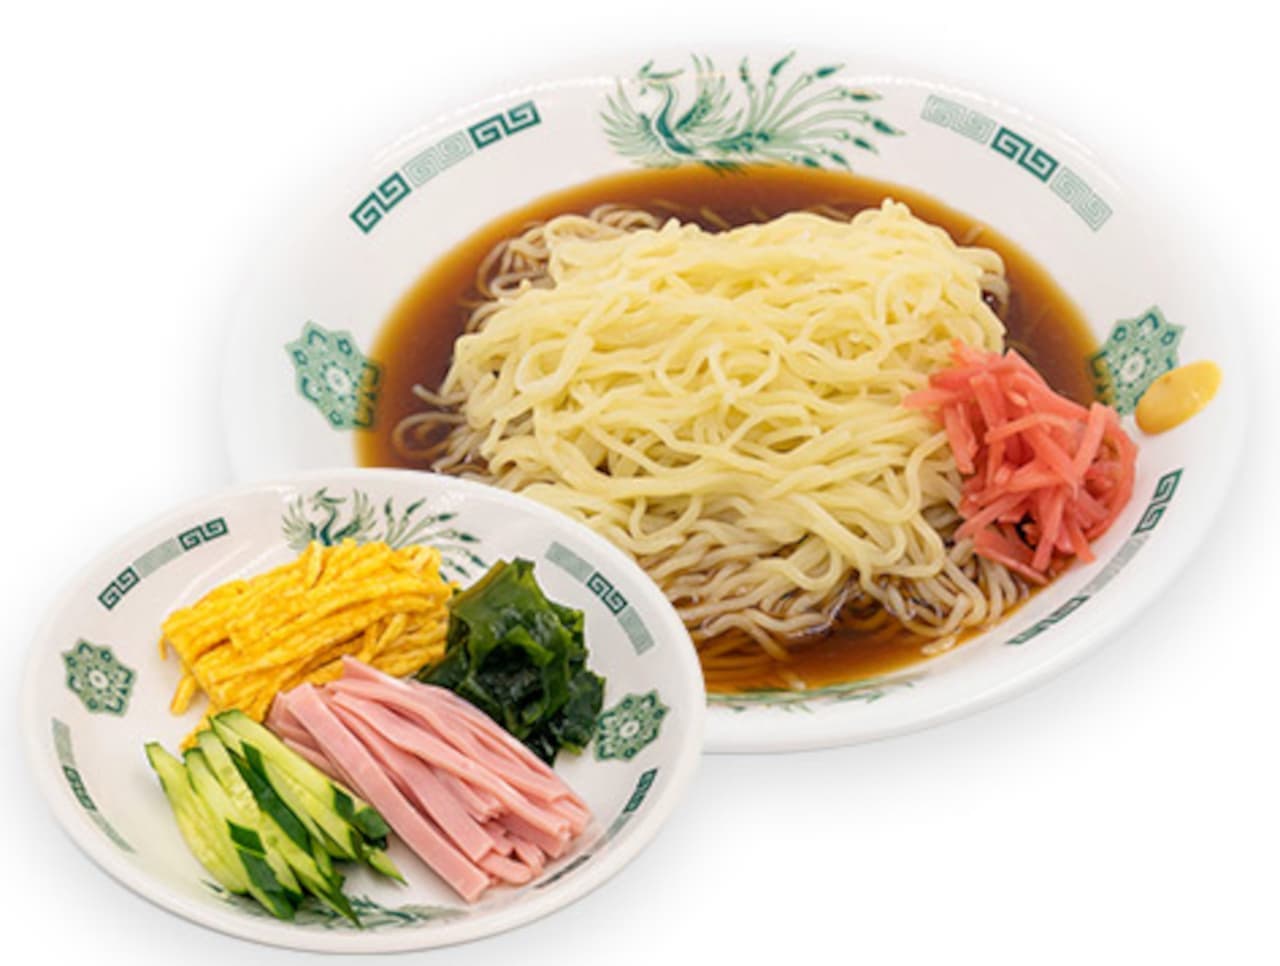 Hidakaya "Kurozu Shoyu Chilled Noodles" and "Omiya Tantanmen